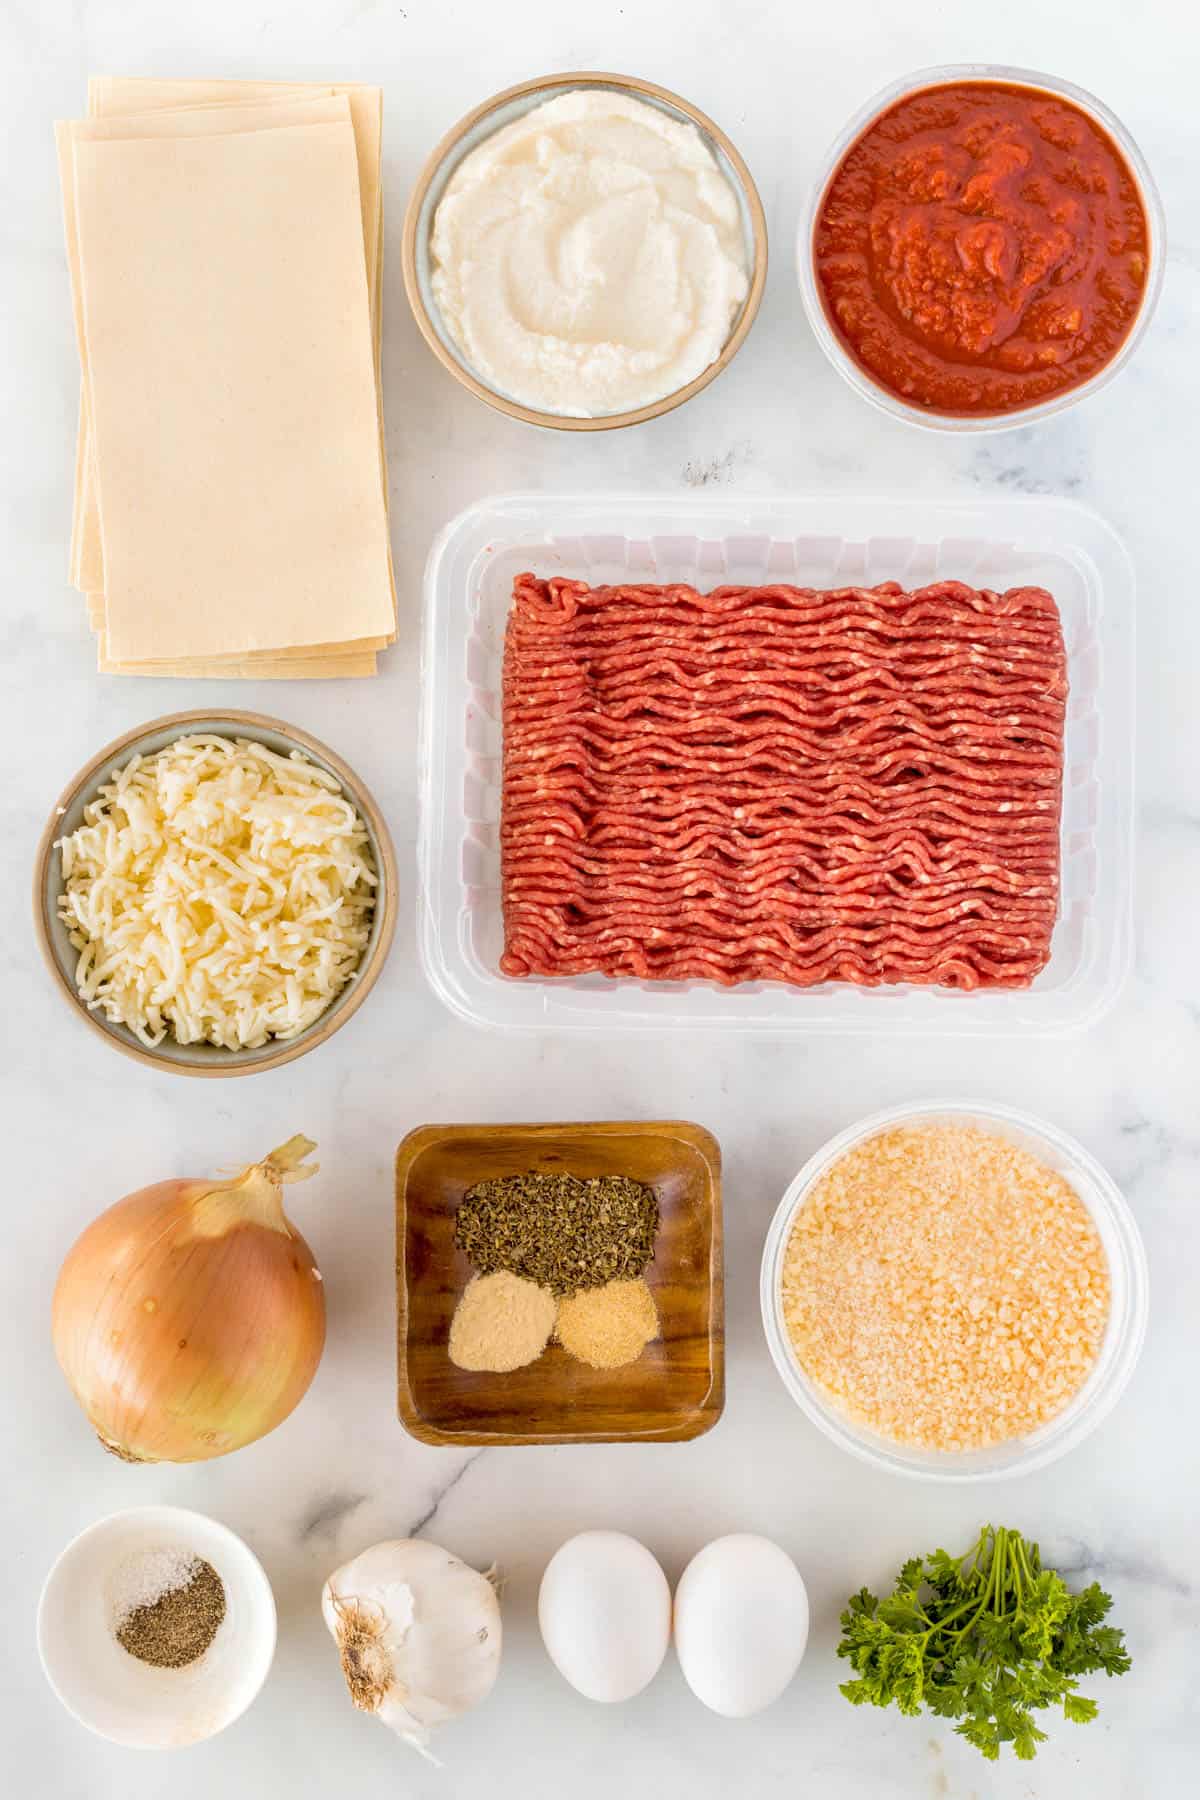 Ingredients for Instant Pot Lasagna